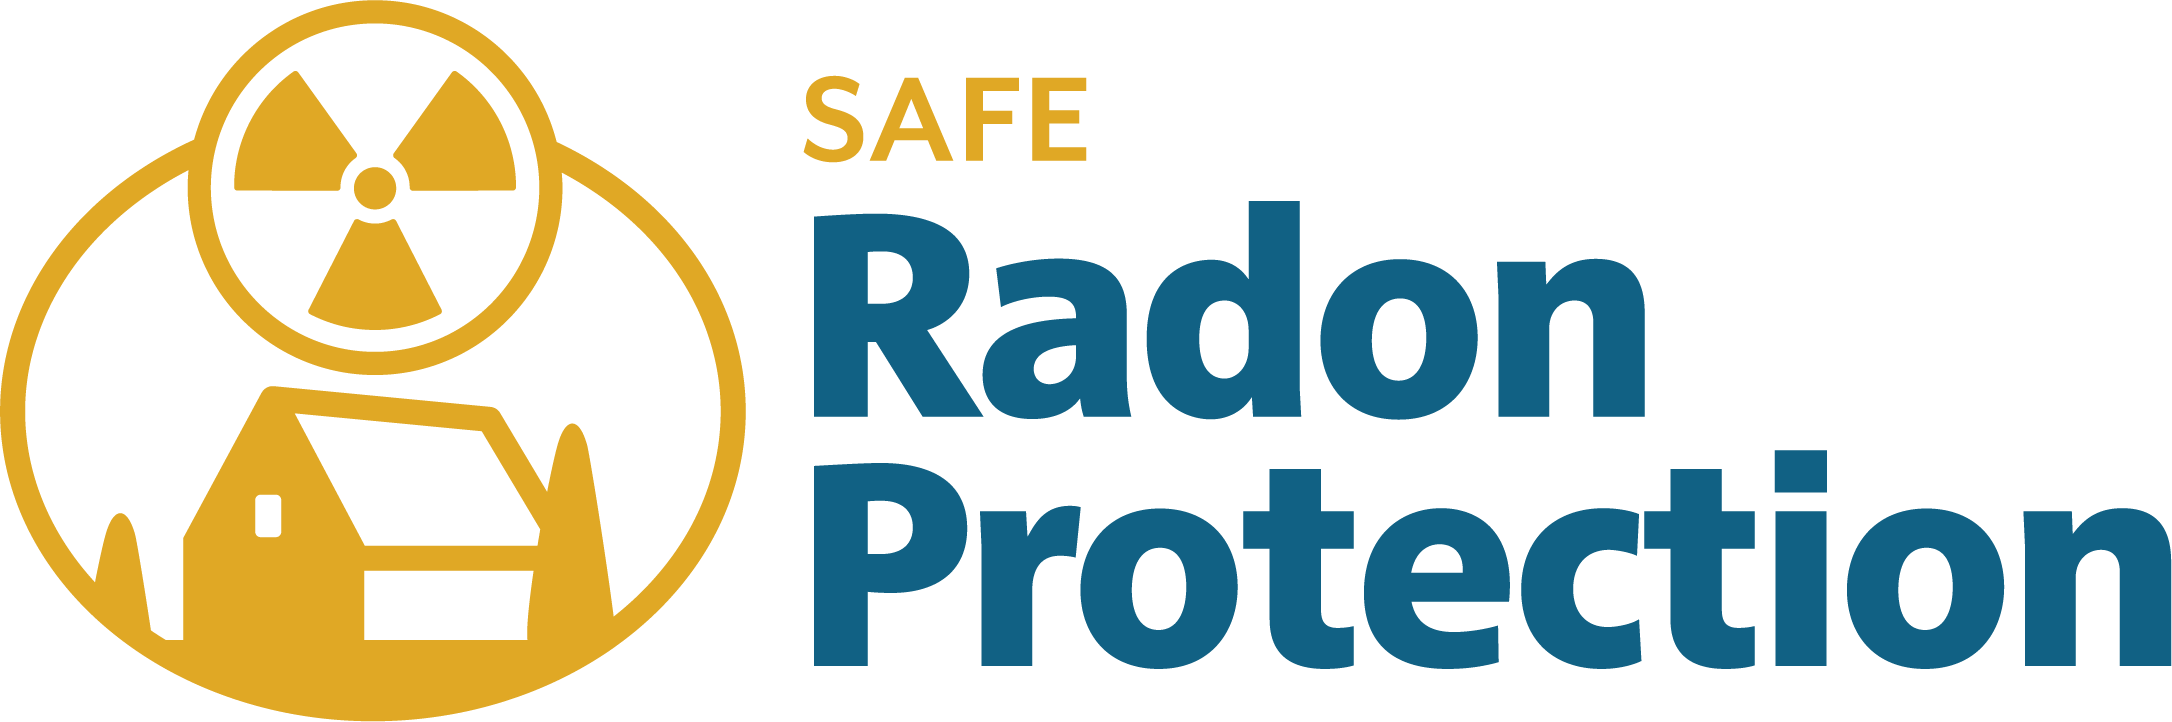 Safe Radon Protection